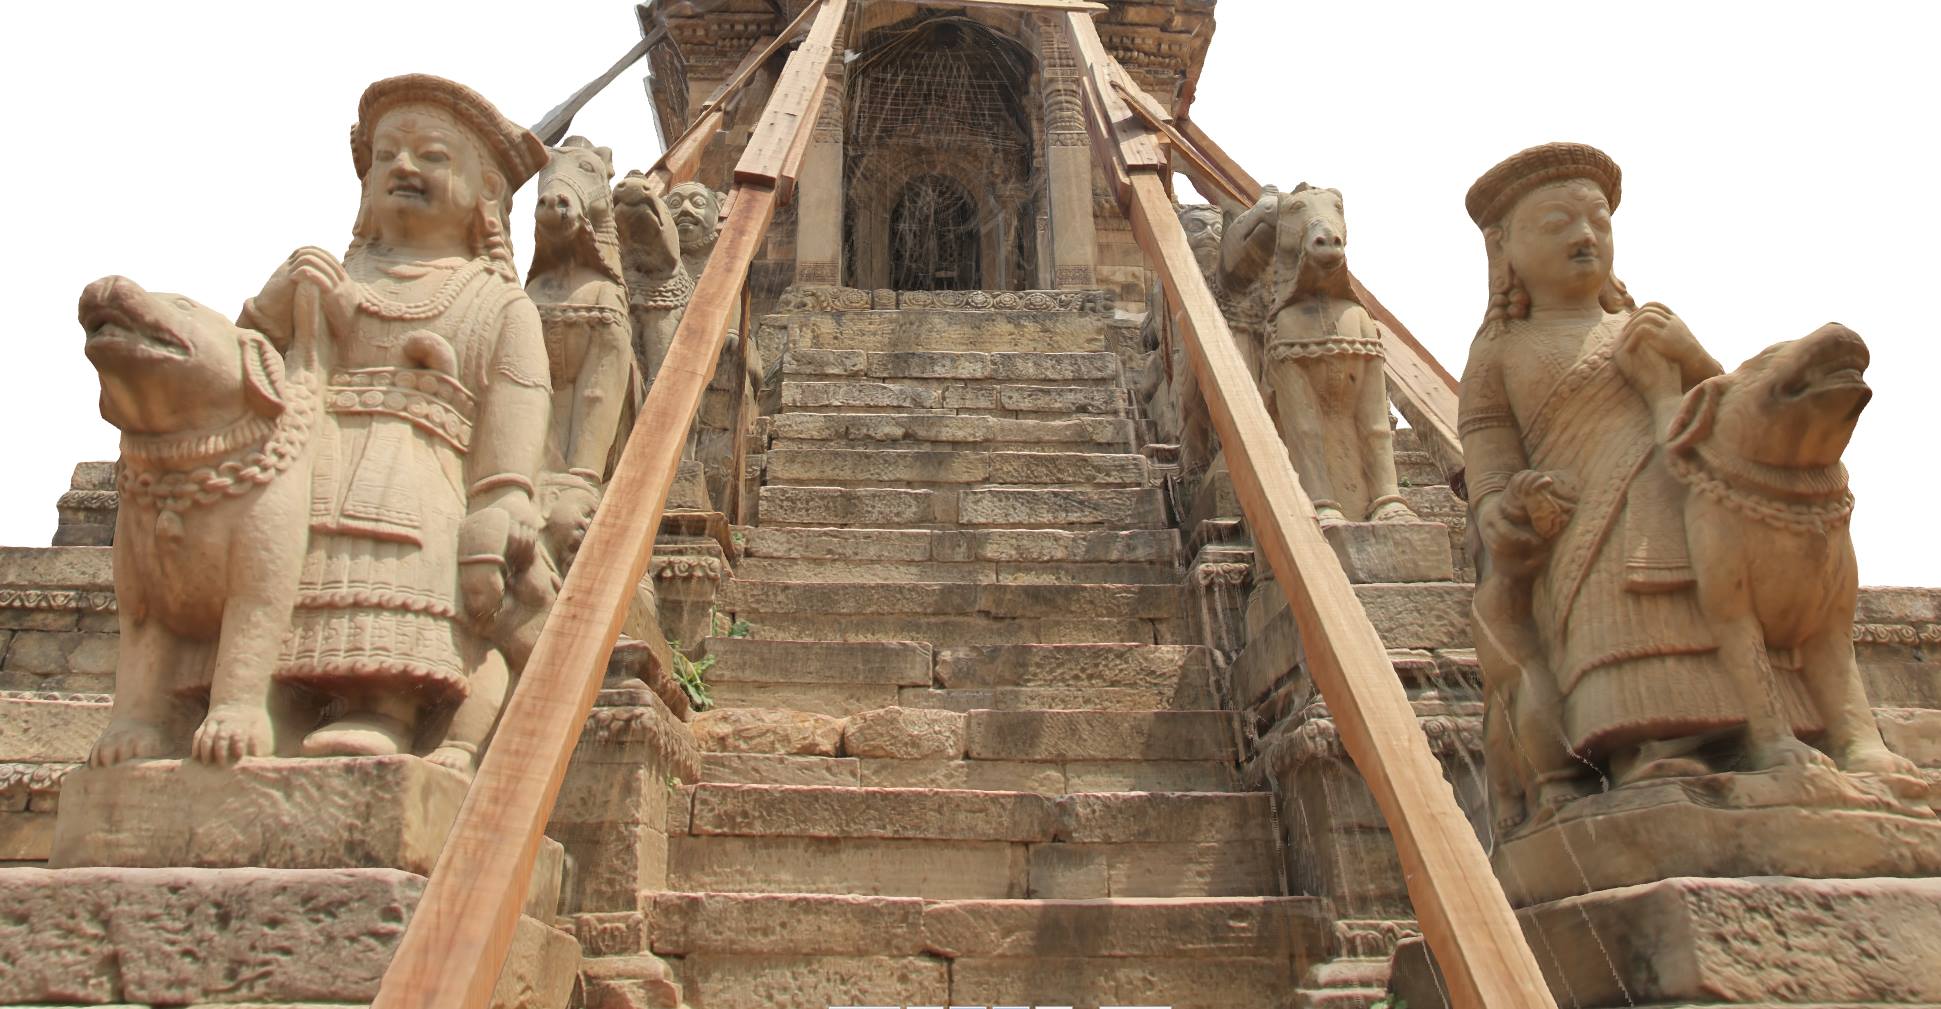 Photograph of Siddhi Laxmi Temple in Bhaktapur